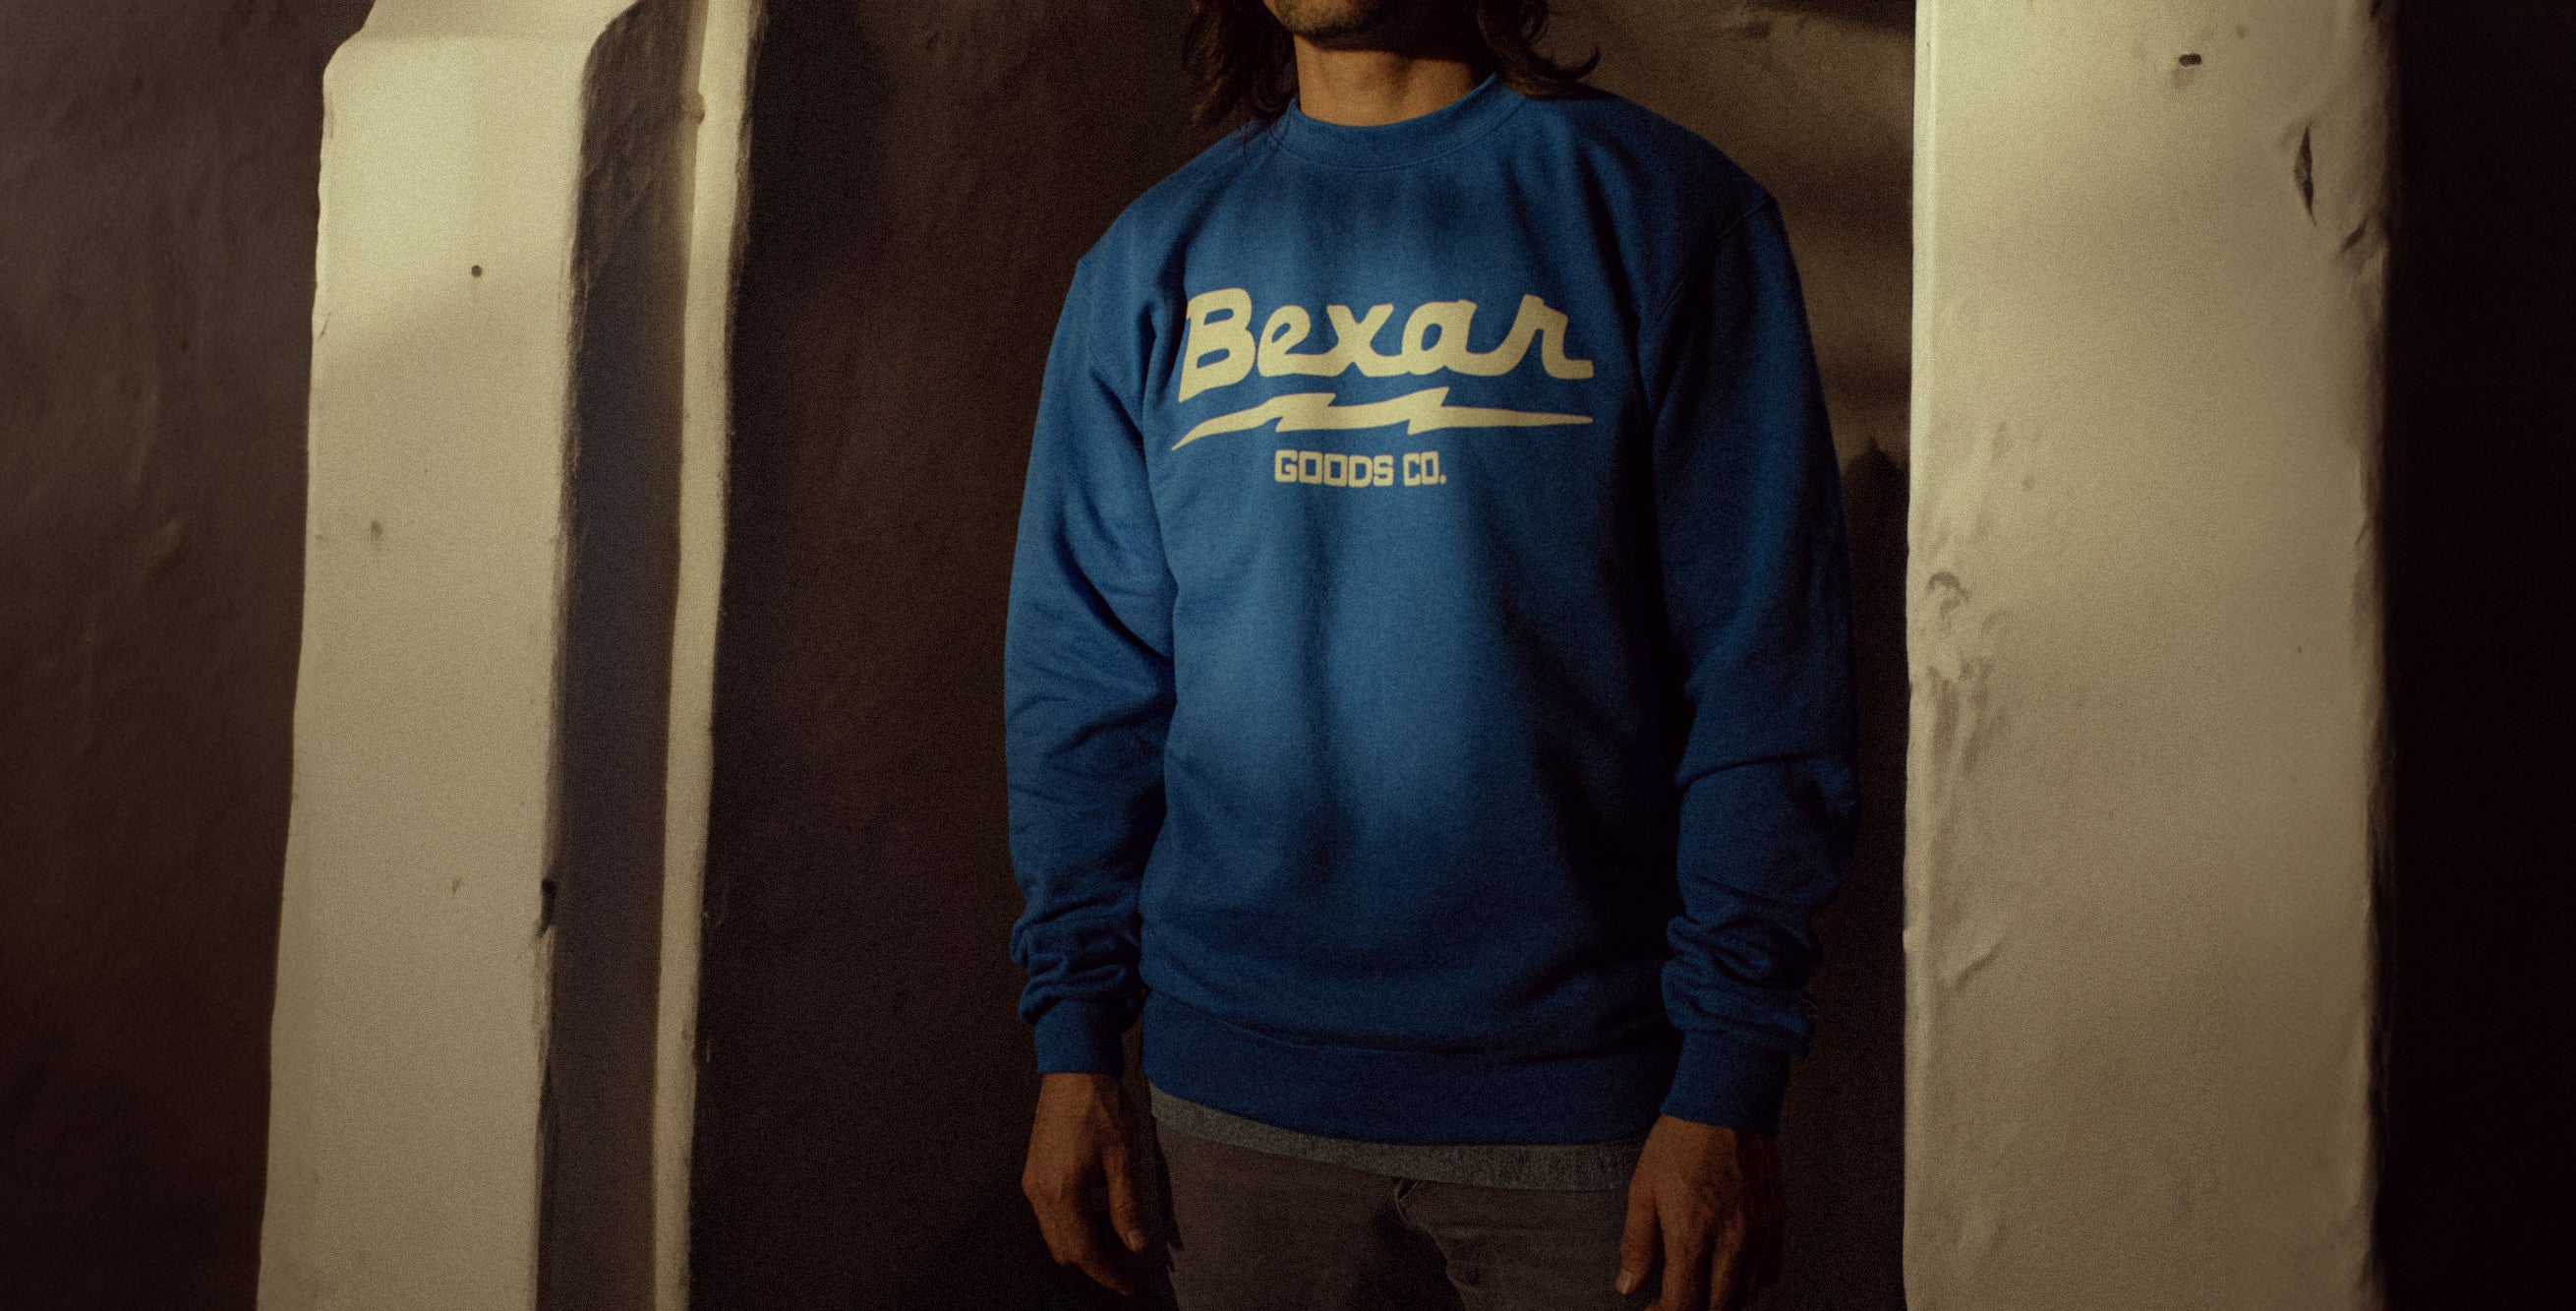 Bexar Bolt Blue Champion Sweatshirt - Bexar Goods